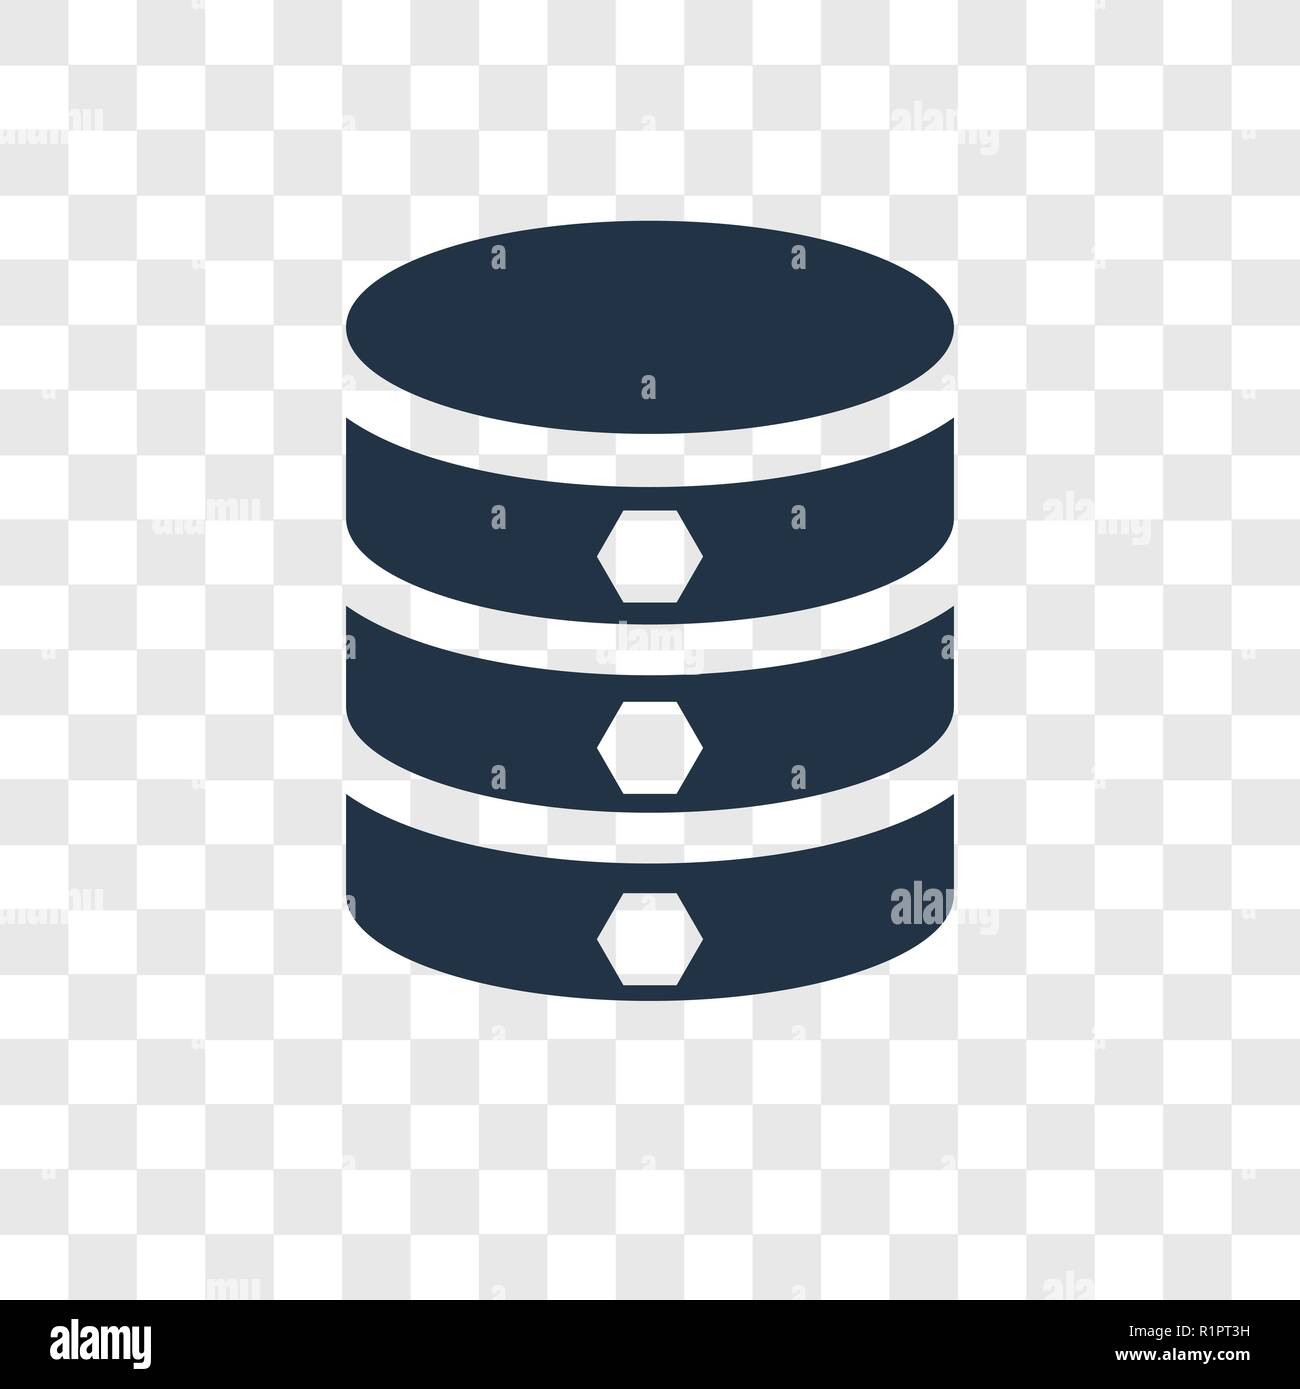 database symbol png